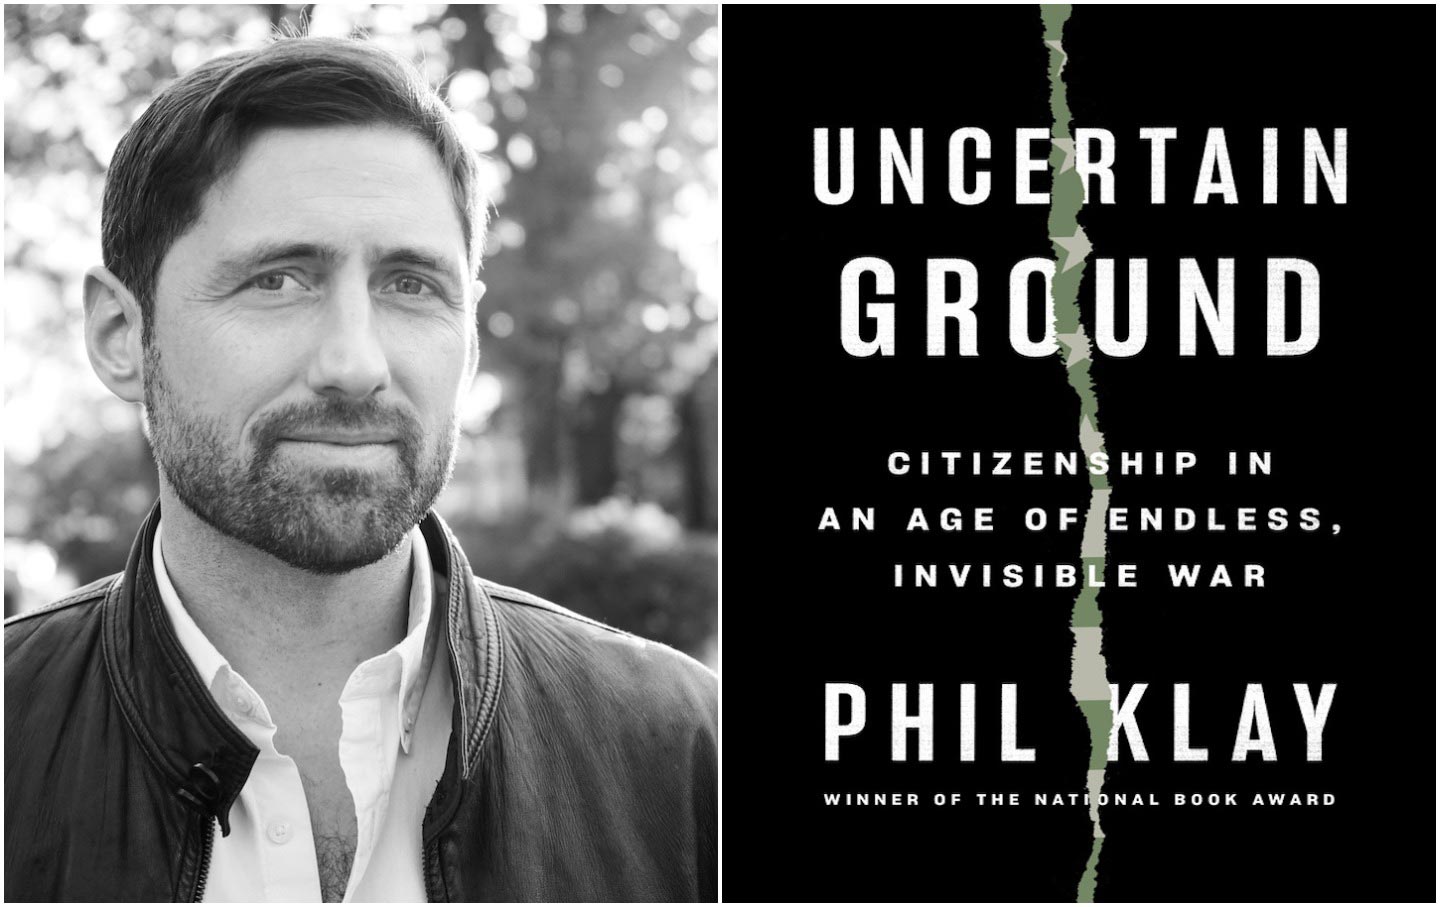 Phil Klay, Uncertain Ground